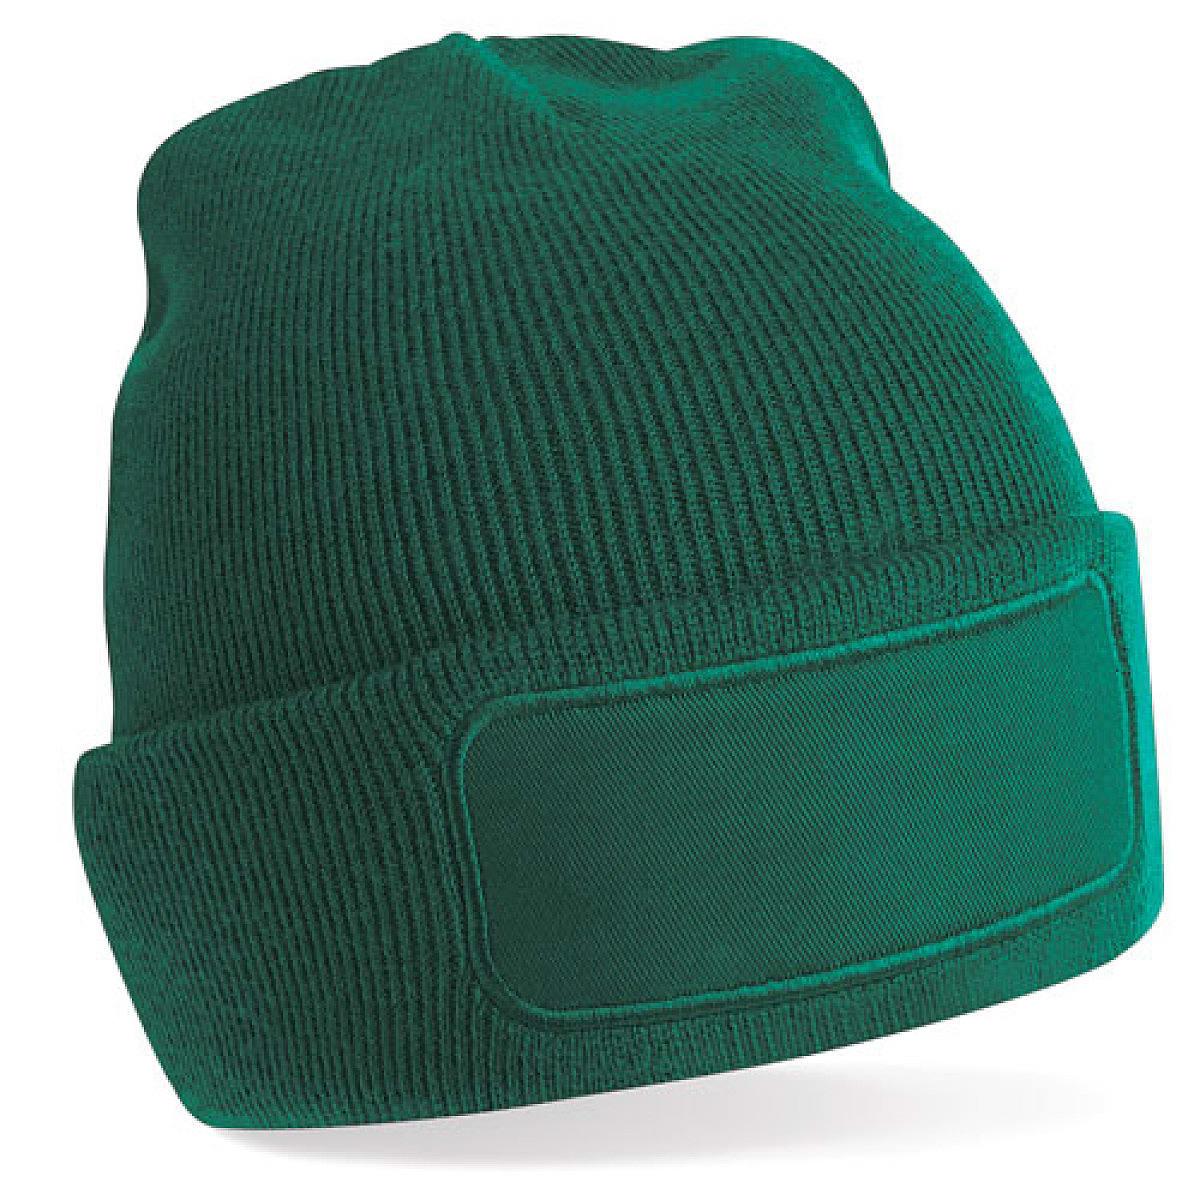 Beechfield Original Patch Beanie Hat in Bottle Green (Product Code: B445)